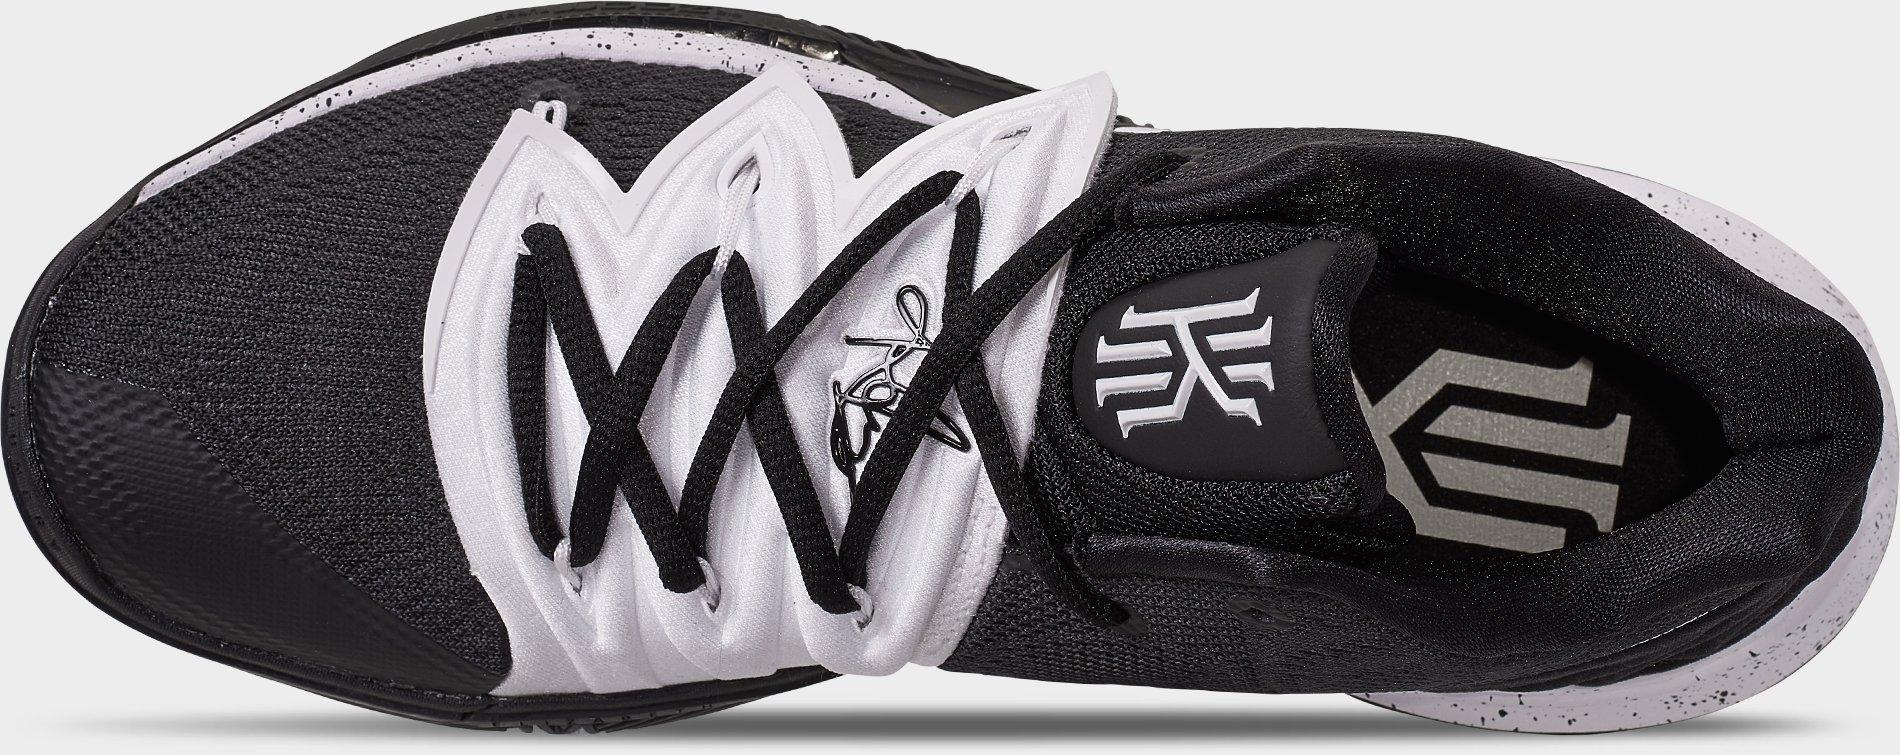 Nike Men 's Kyrie 5 TB Basketball Shoes White Black Sport